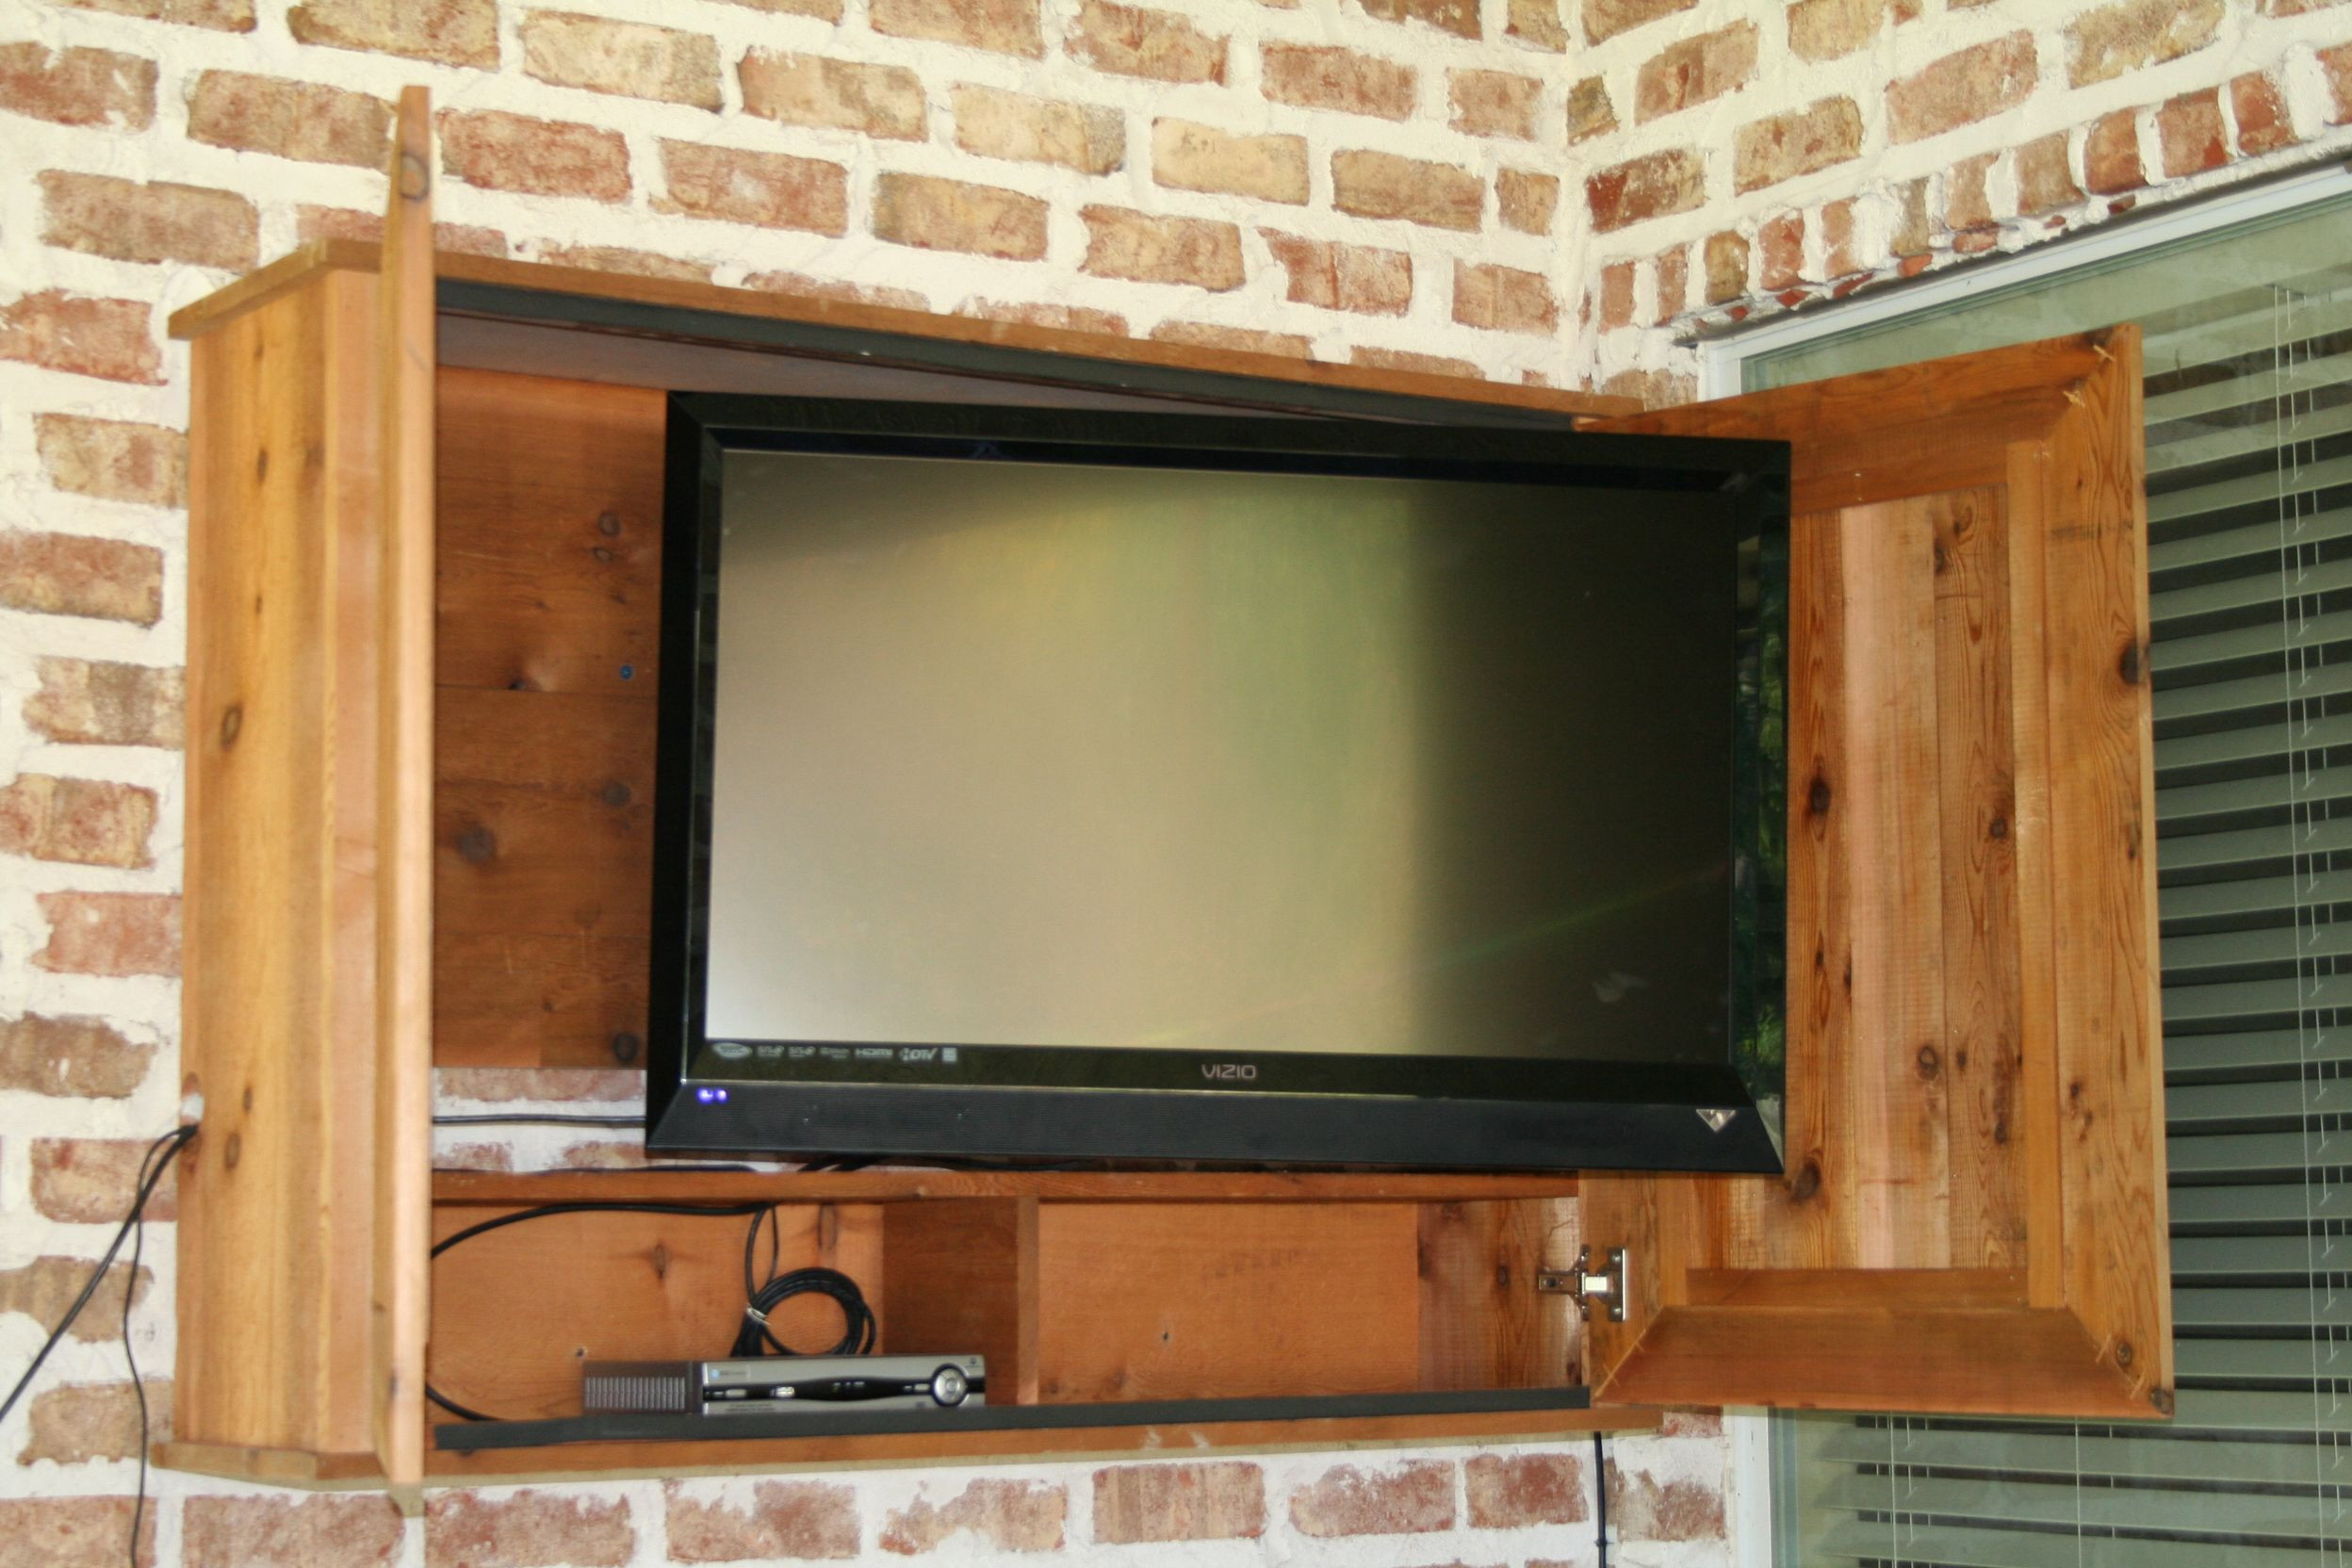 Diy Outdoor Tv Cabinet Plans Lovely Outdoor Tv Cabinet For The Patio Of Diy Outdoor Tv Cabinet Plans 